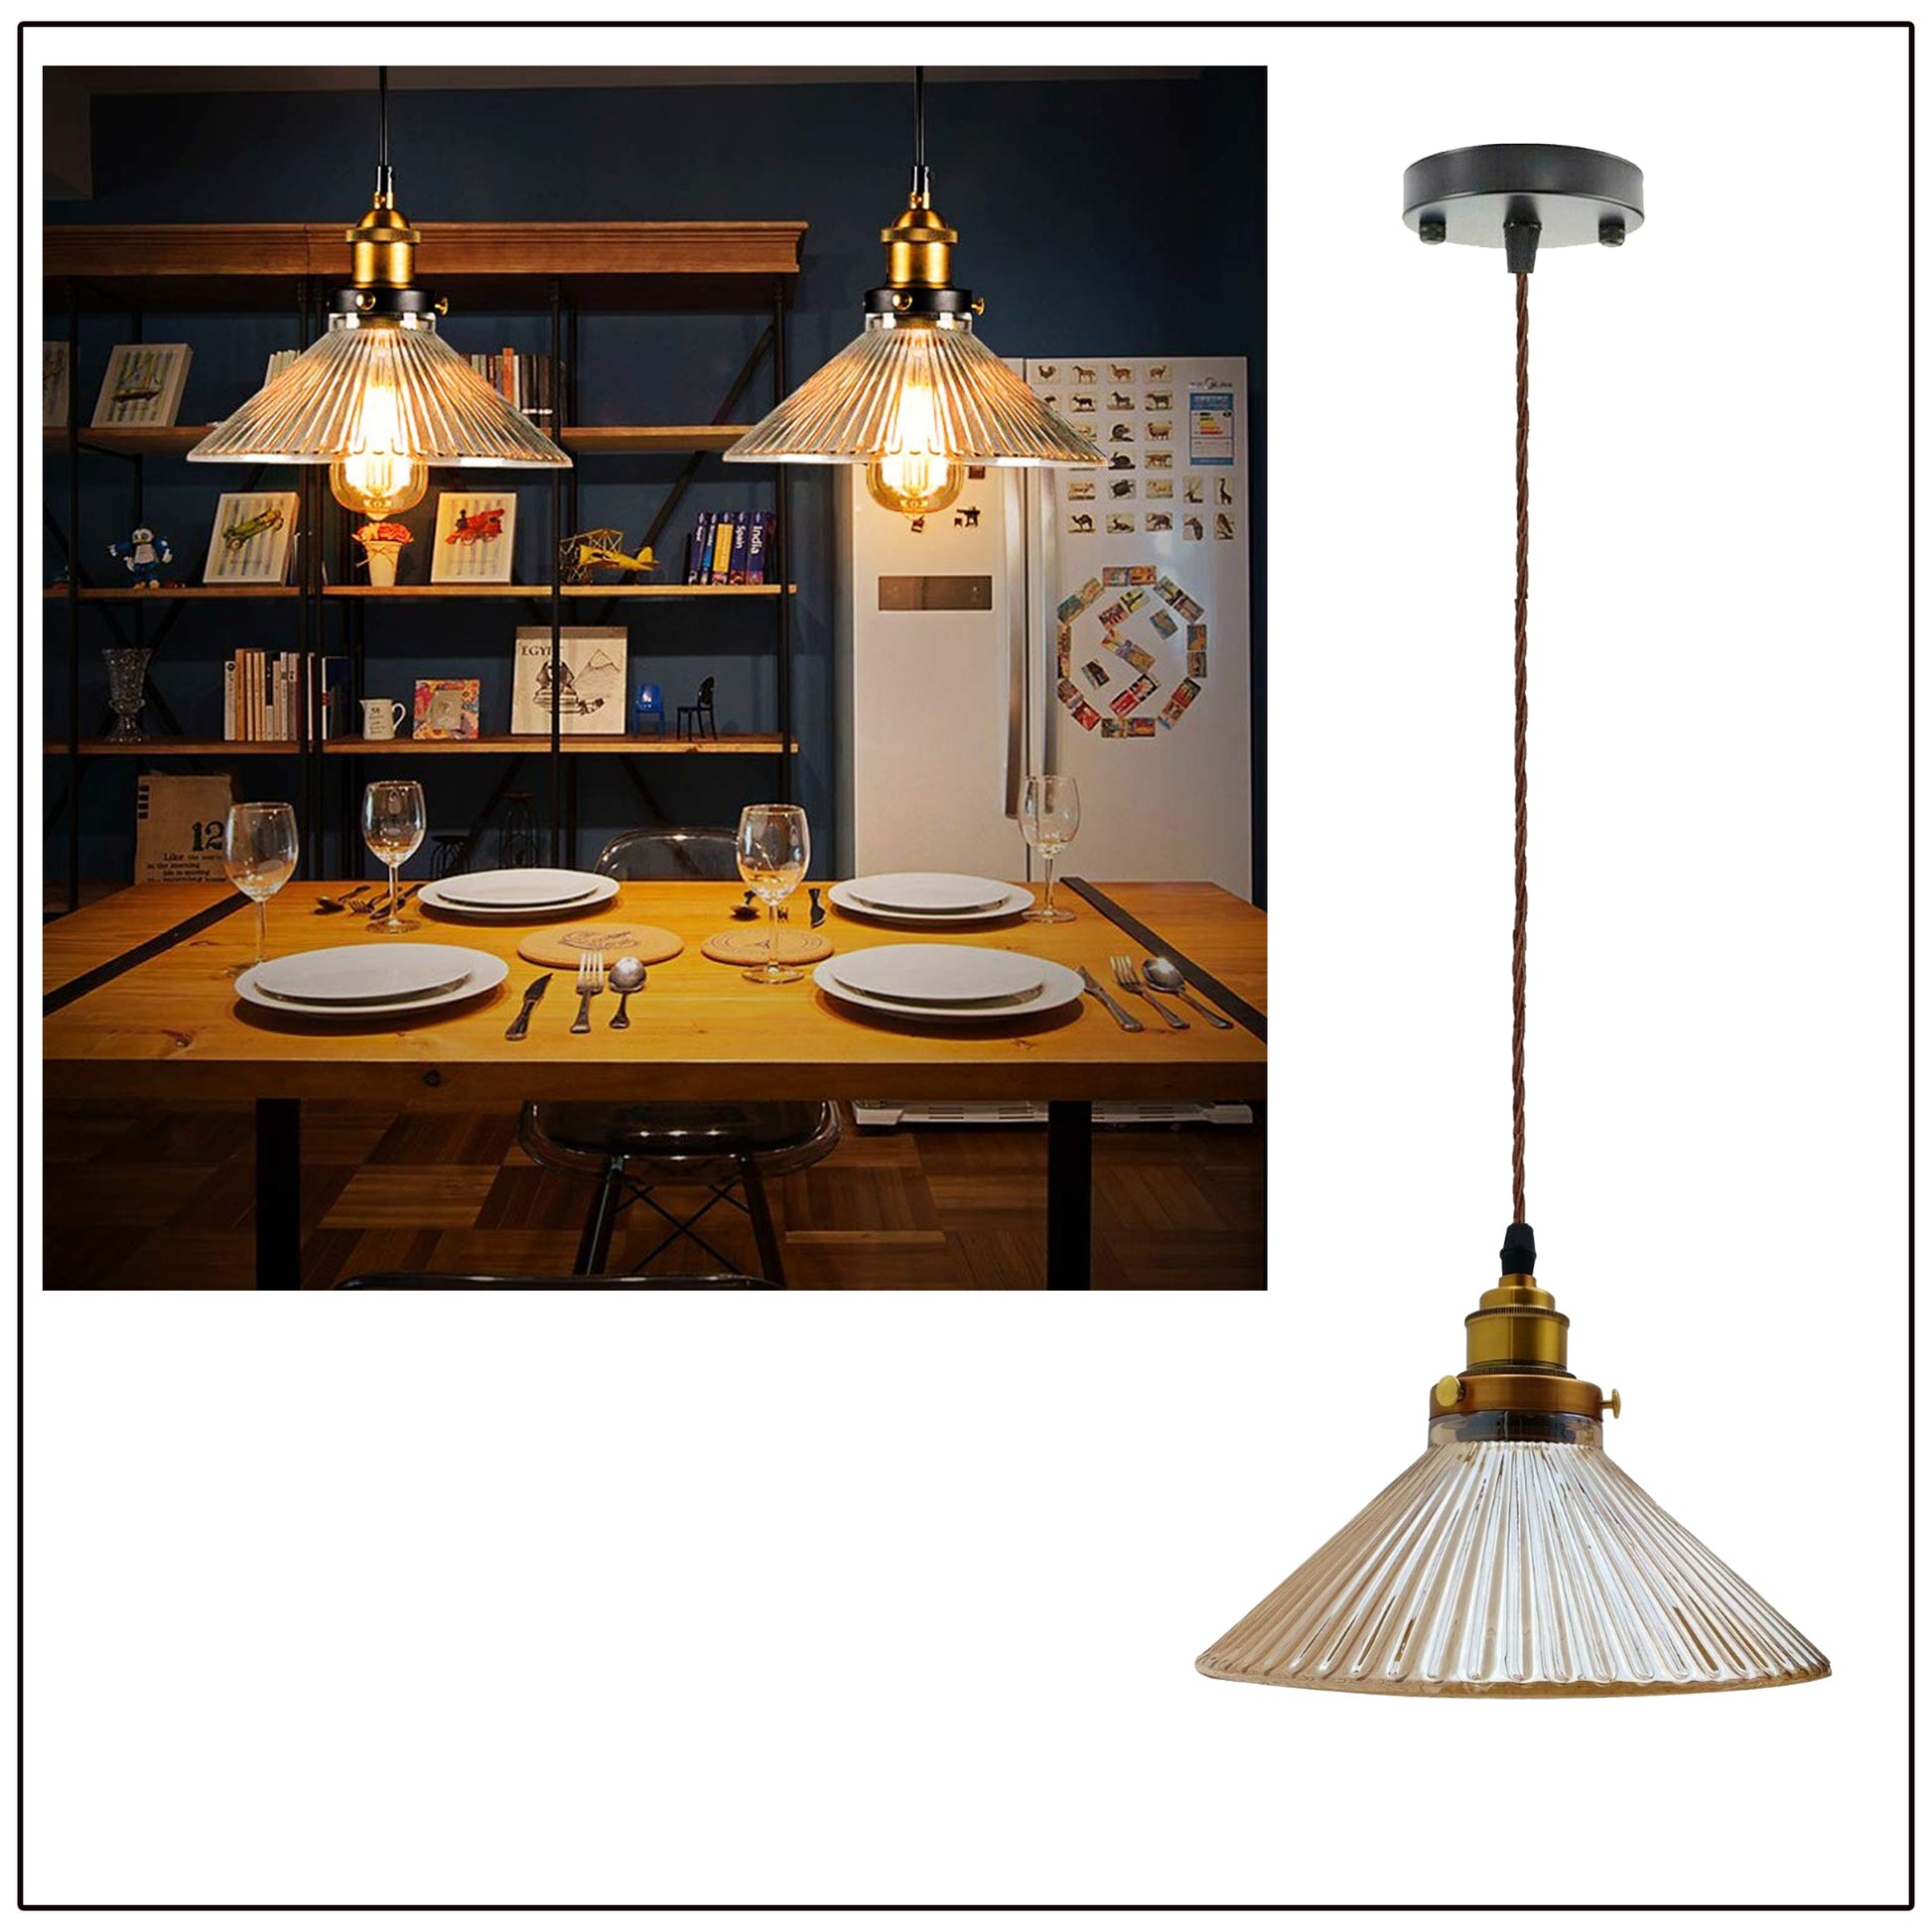 Style Glass Shade Lamp Ceiling Retro Pendant Lighting - Vintagelite